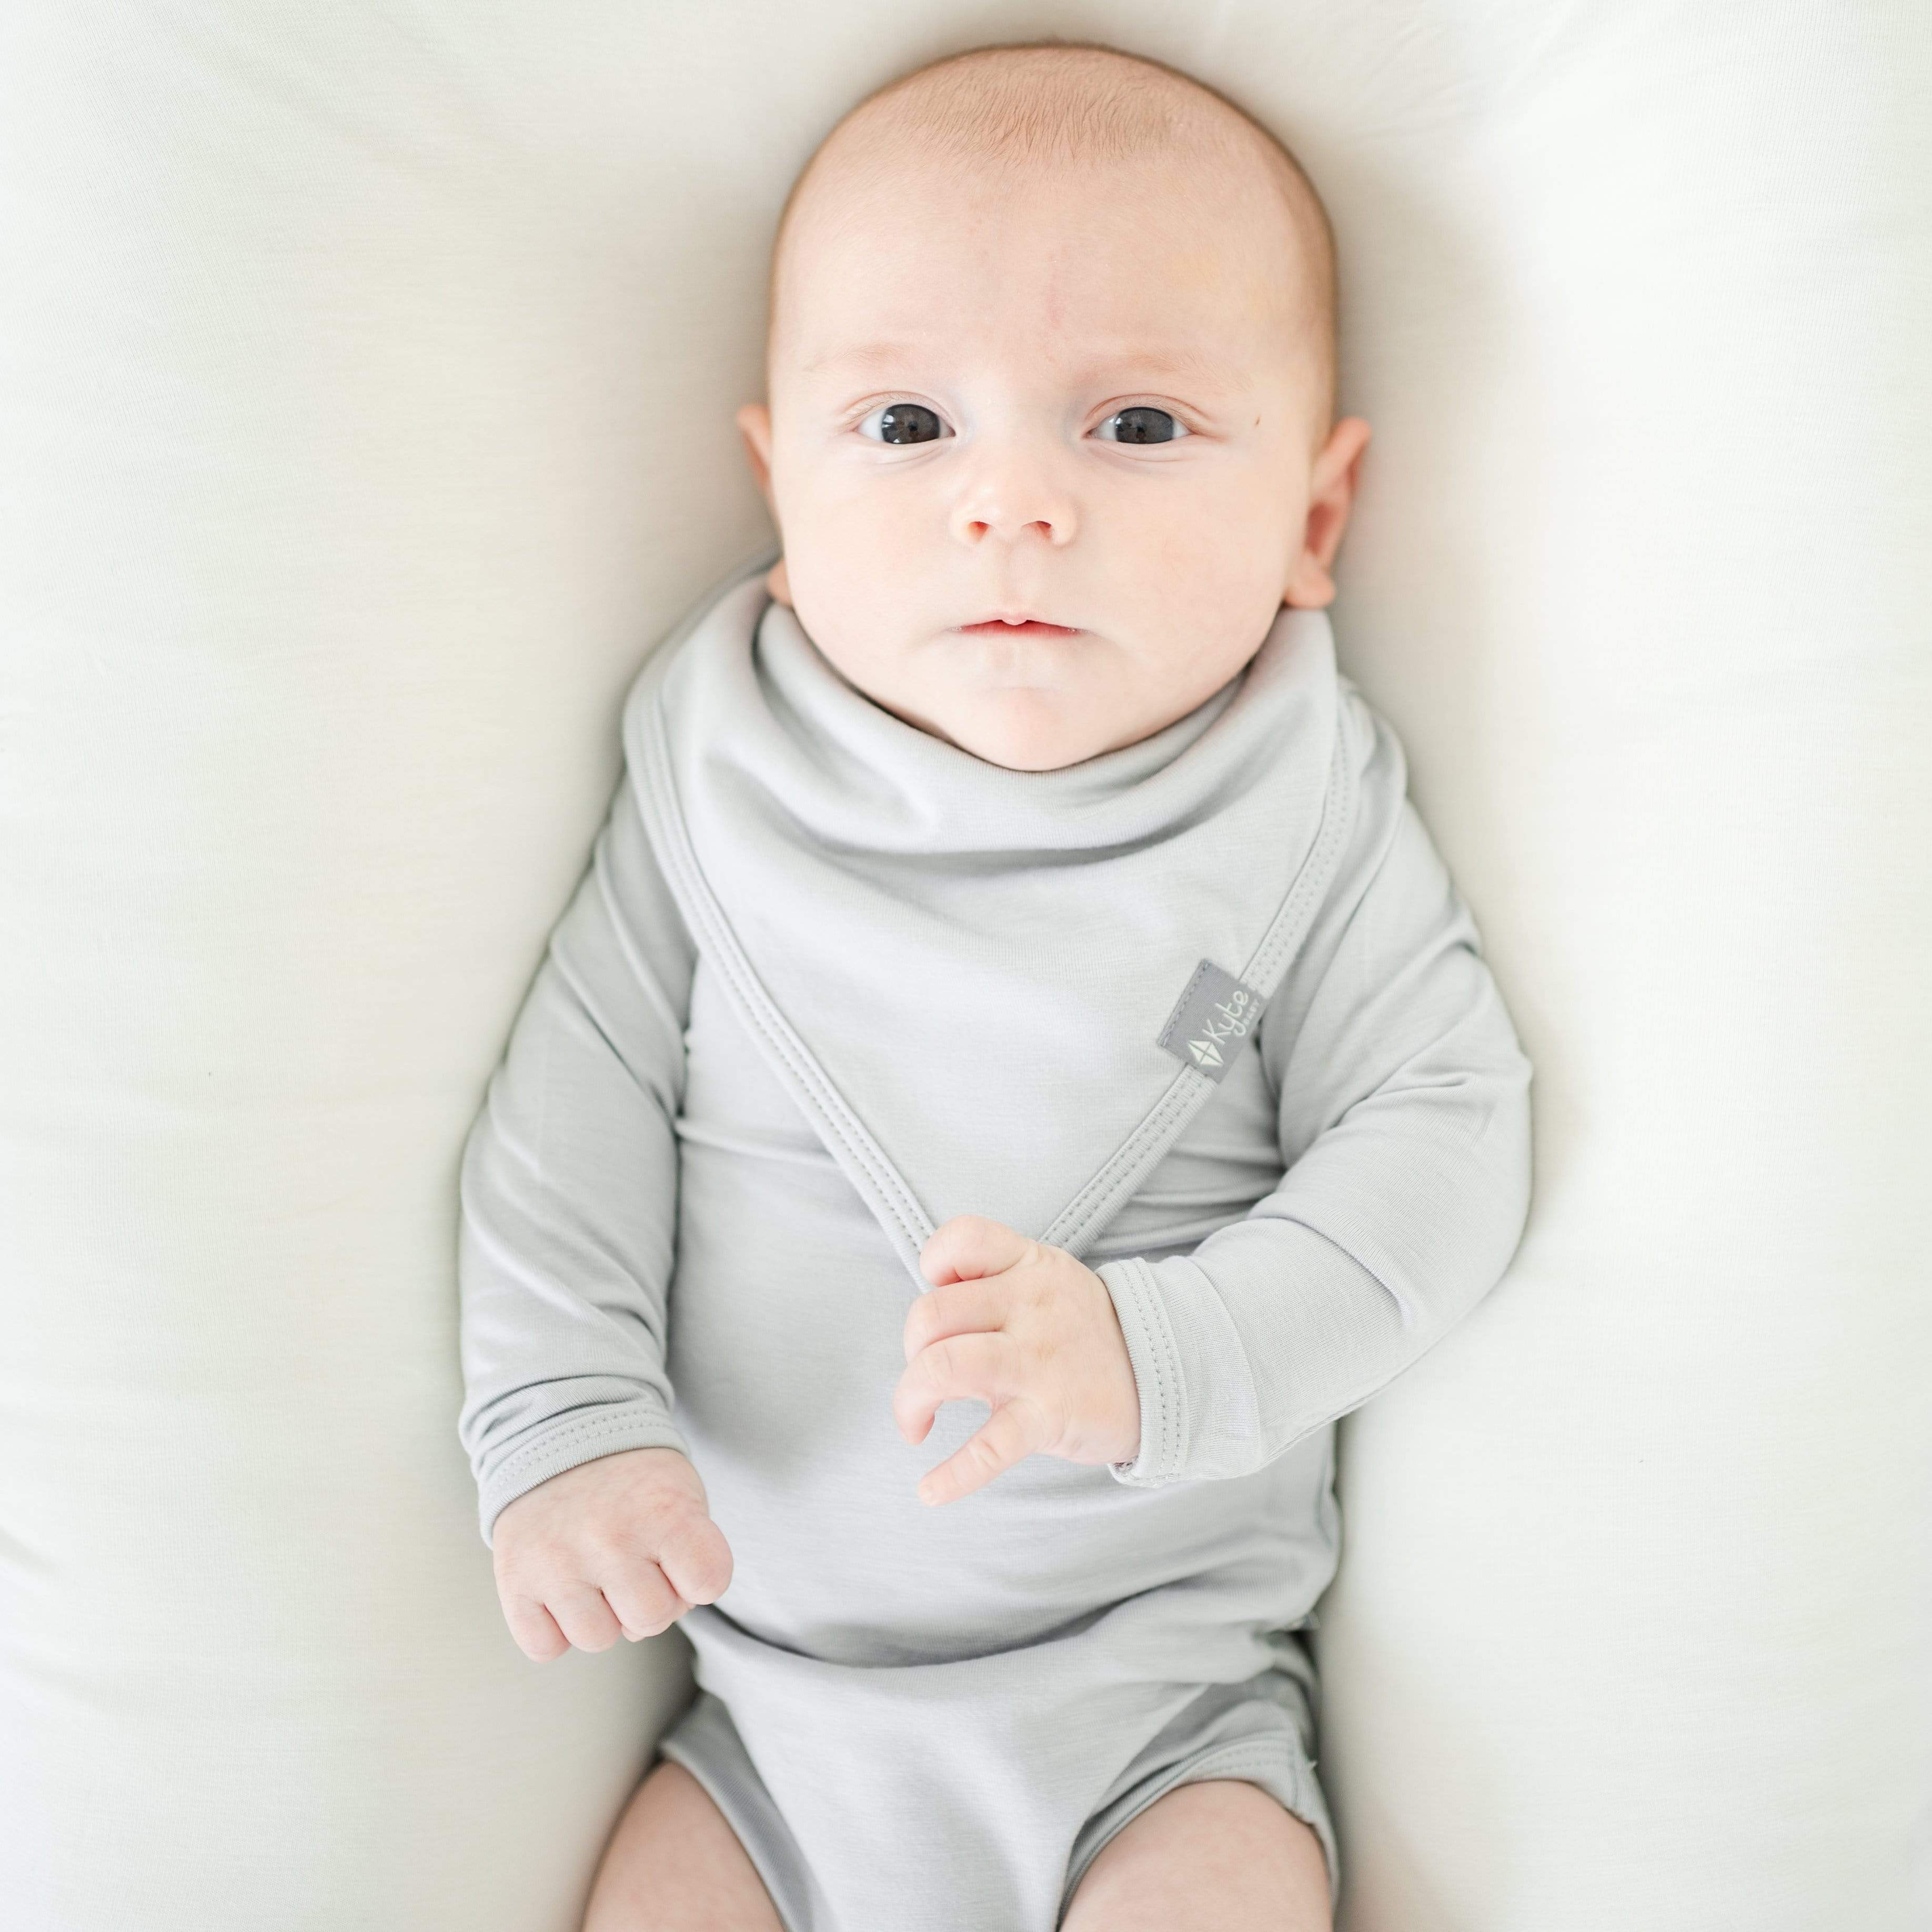 Infant wearing Kyte Baby Bib in Storm gray